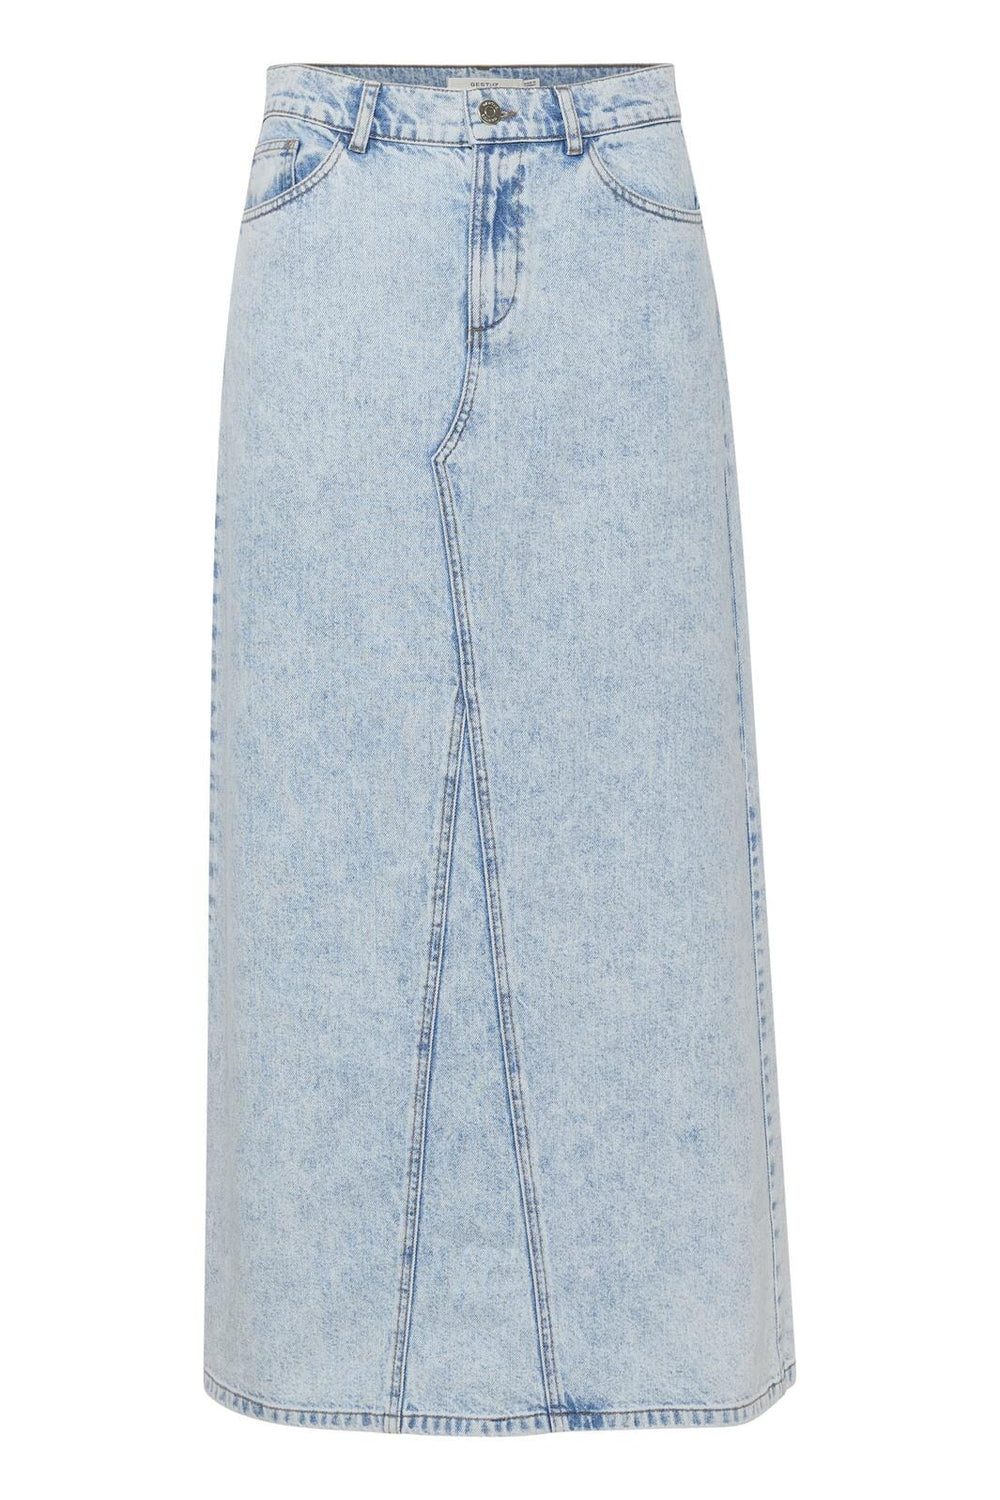 Gestuz - MilyGZ HW long skirt - Mid blue washed